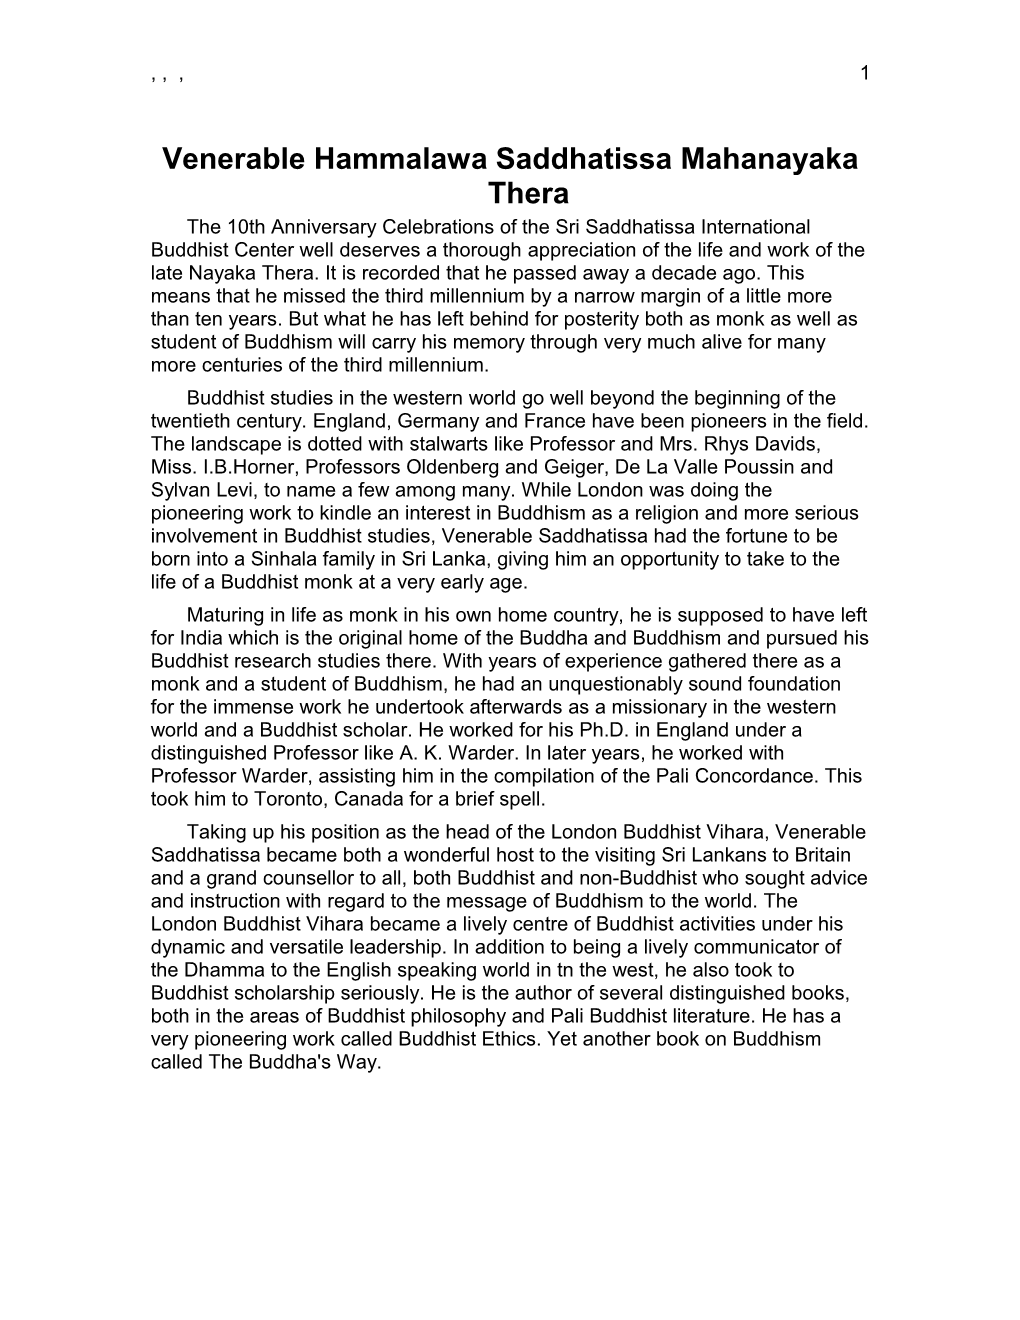 Venerable Hammalawa Saddhatissa Mahanayaka Thera